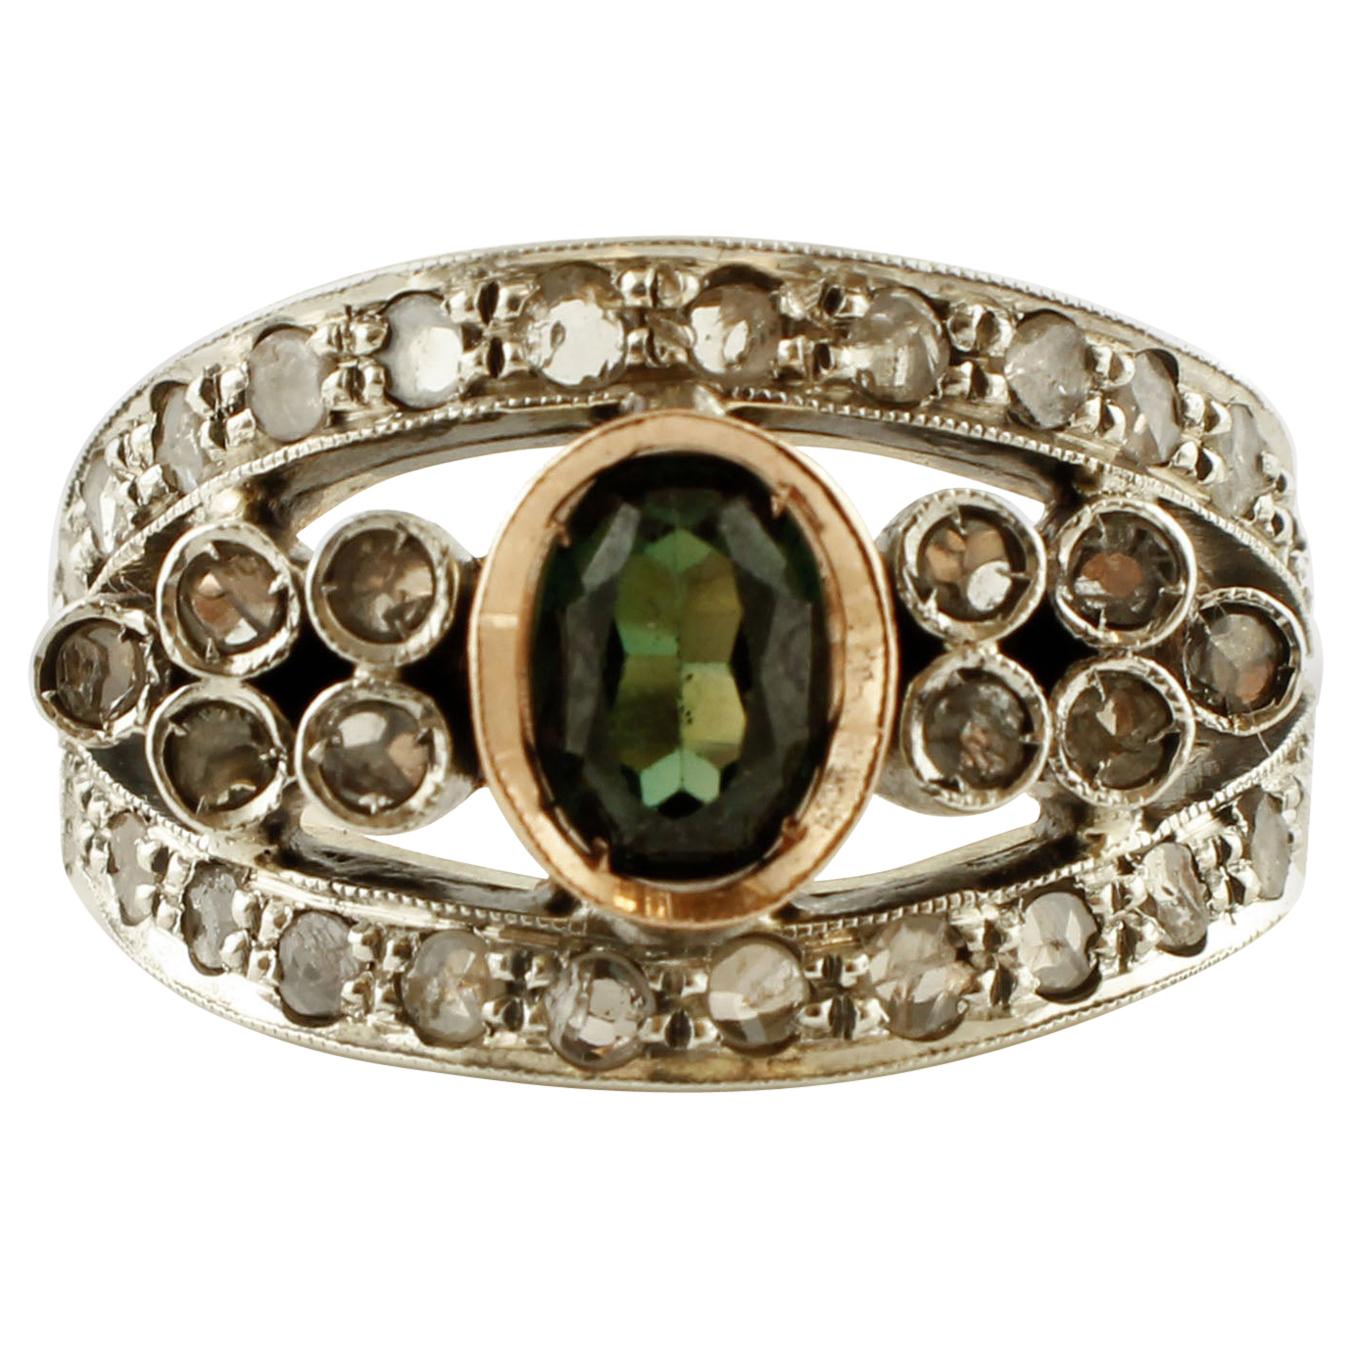 Emerald, Diamonds, 14 Karat Rose Gold and Silver Retro Ring